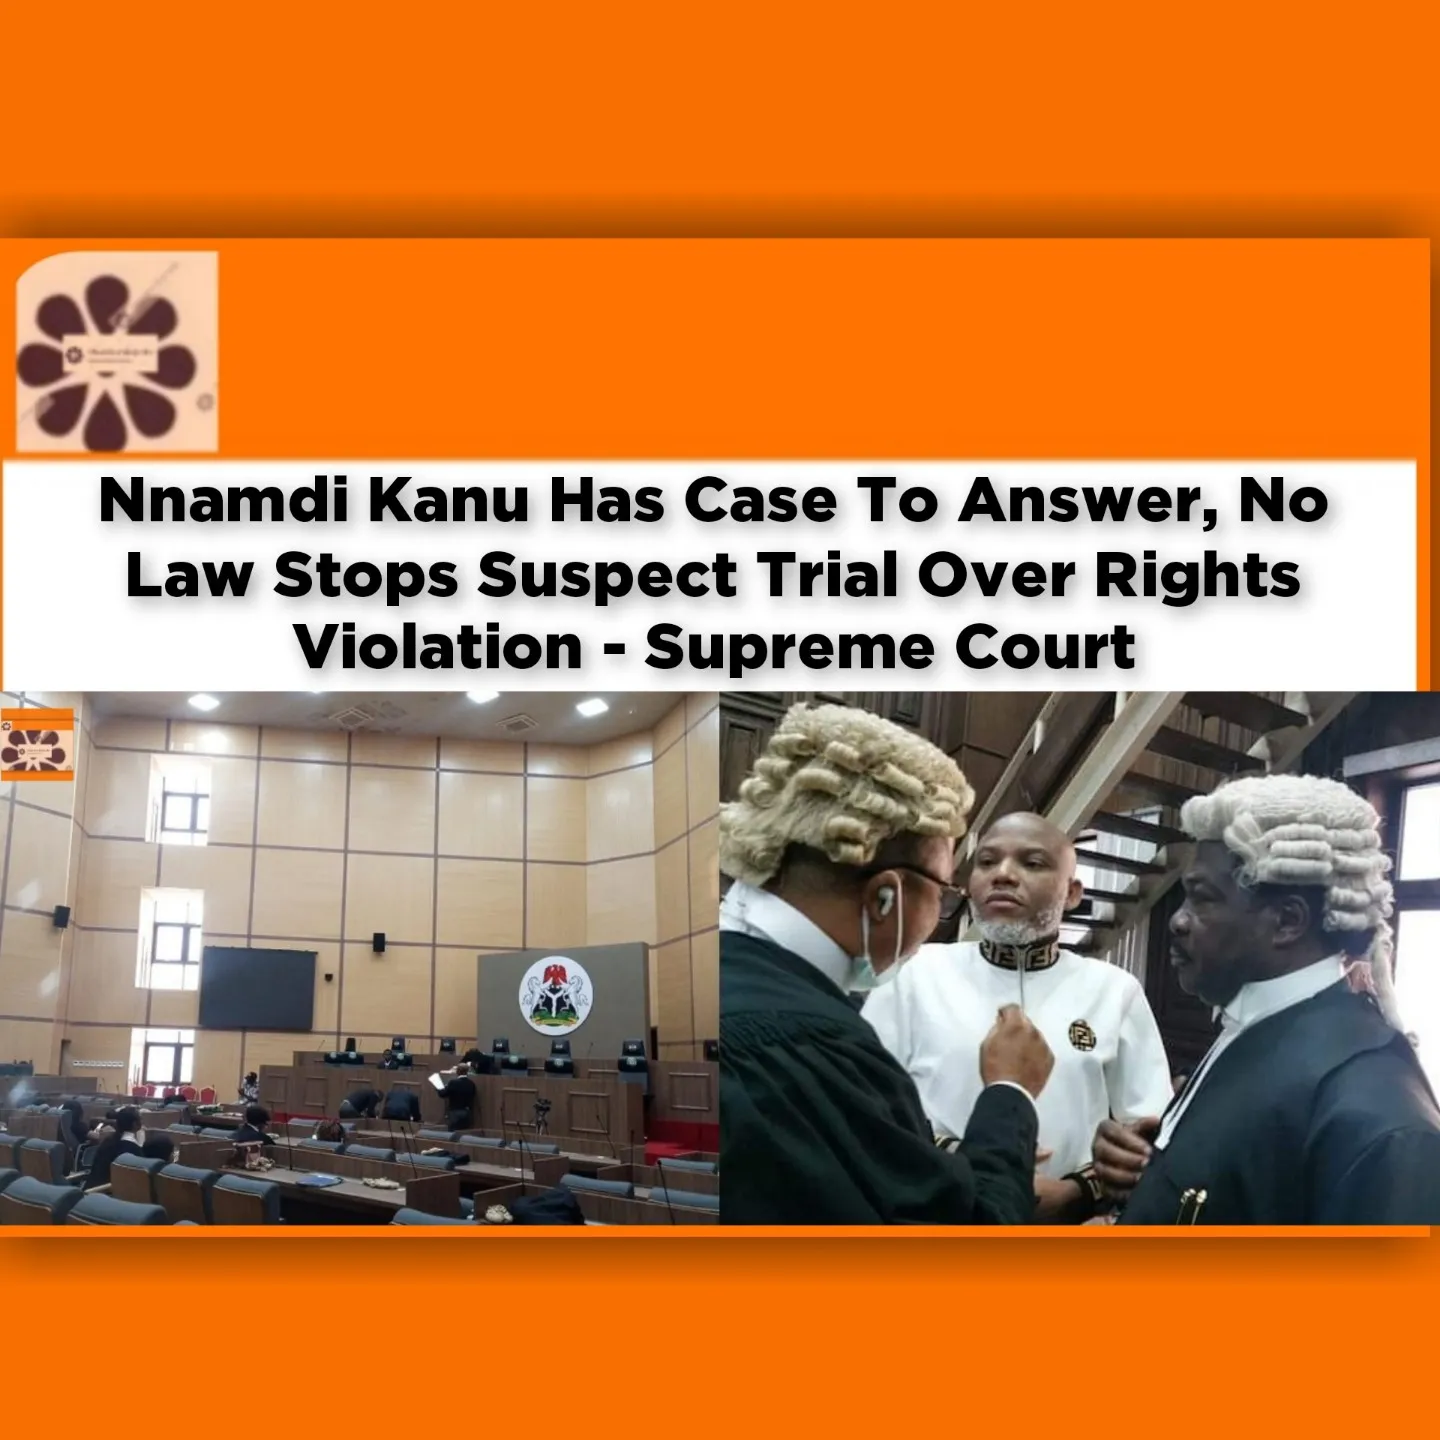 Nnamdi Kanu Has Case To Answer, No Law Stops Suspect Trial Over Rights Violation - Supreme Court ~ OsazuwaAkonedo #Biafra #Dss #FG #Kanu #Kenya #Nnamdi #OsazuwaAkonedo #SupremeCourt